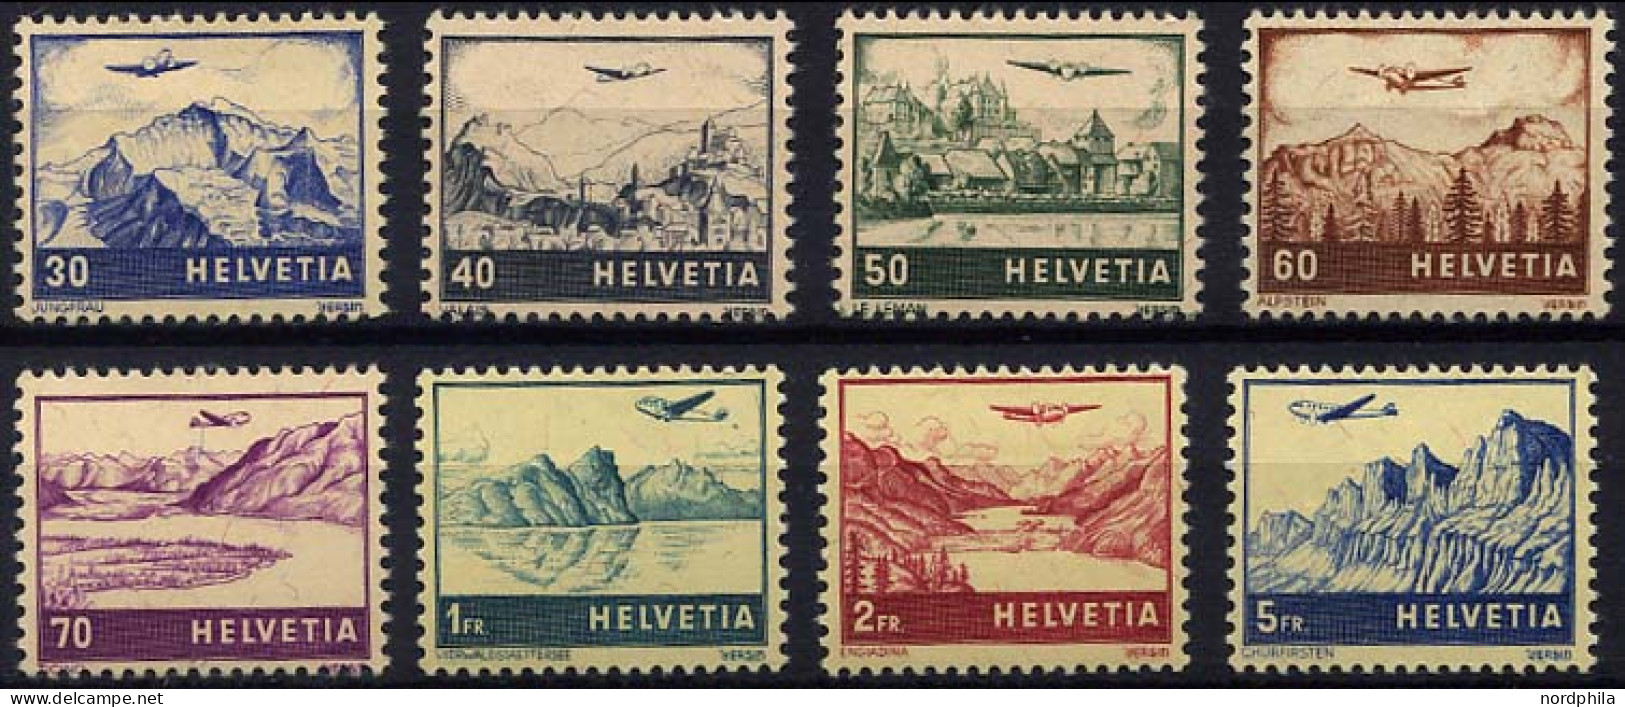 SCHWEIZ BUNDESPOST 387-94 *, 1941, Flugzeug über Landschaften, Falzreste, Prachtsatz - Used Stamps